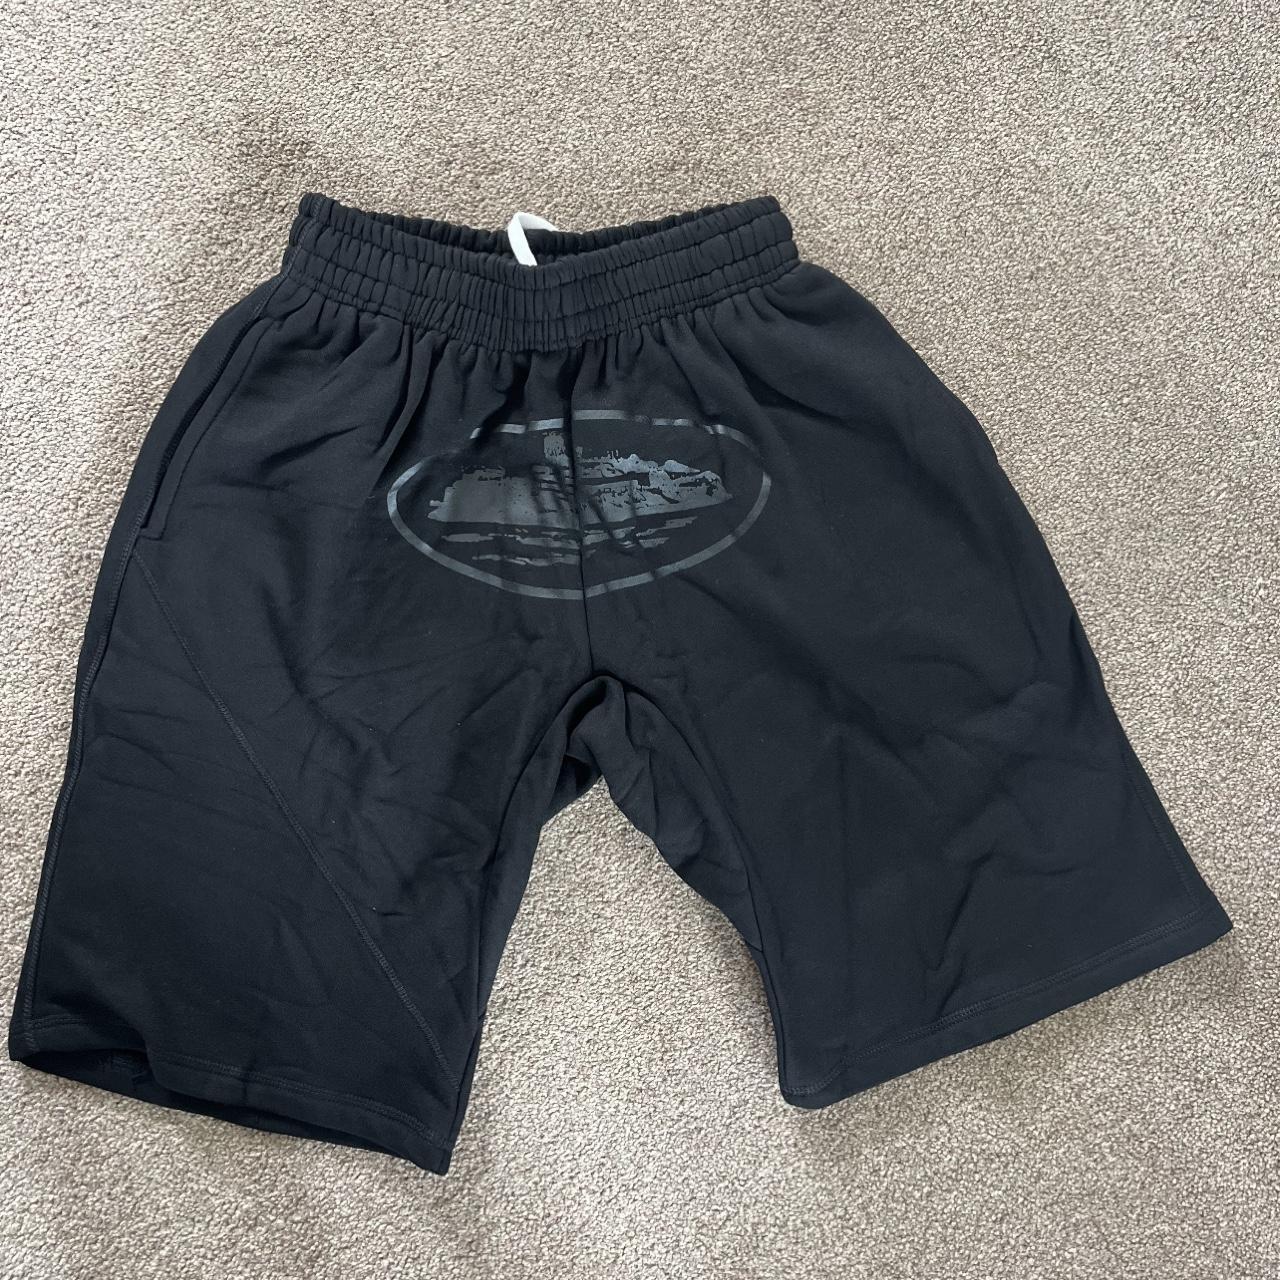 Crtz Corteiz black on black shorts 🔥 Brand new... - Depop